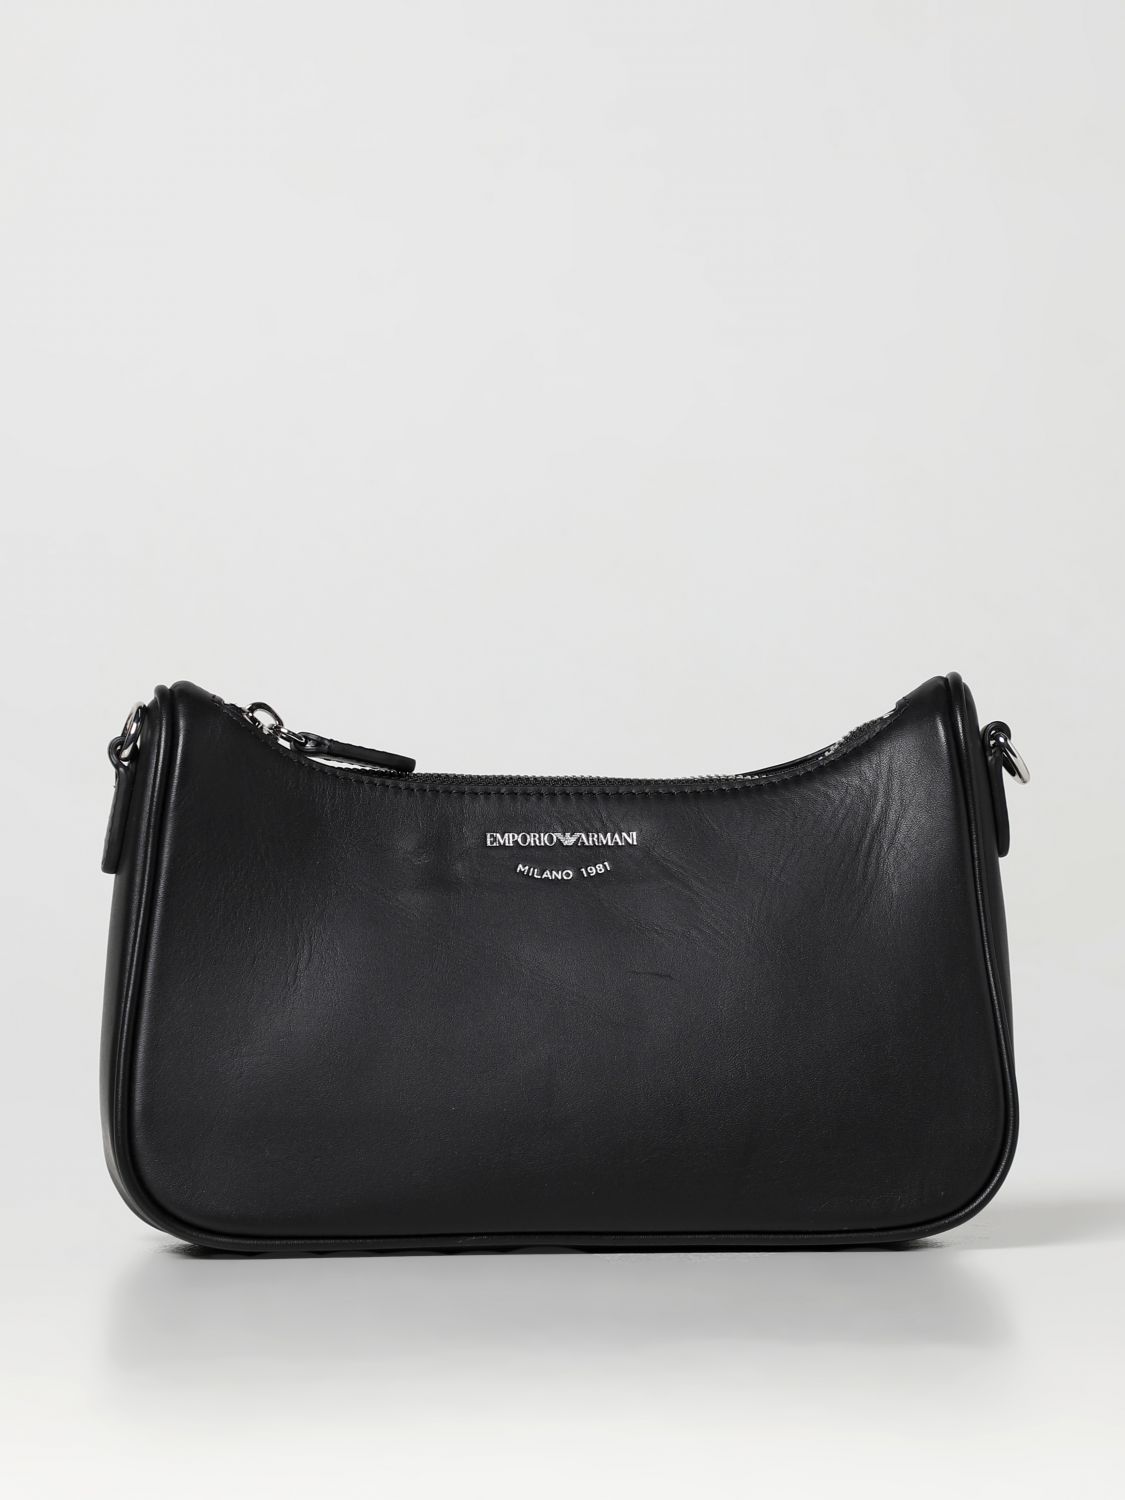 Emporio Armani Women's Sling Bag - Black